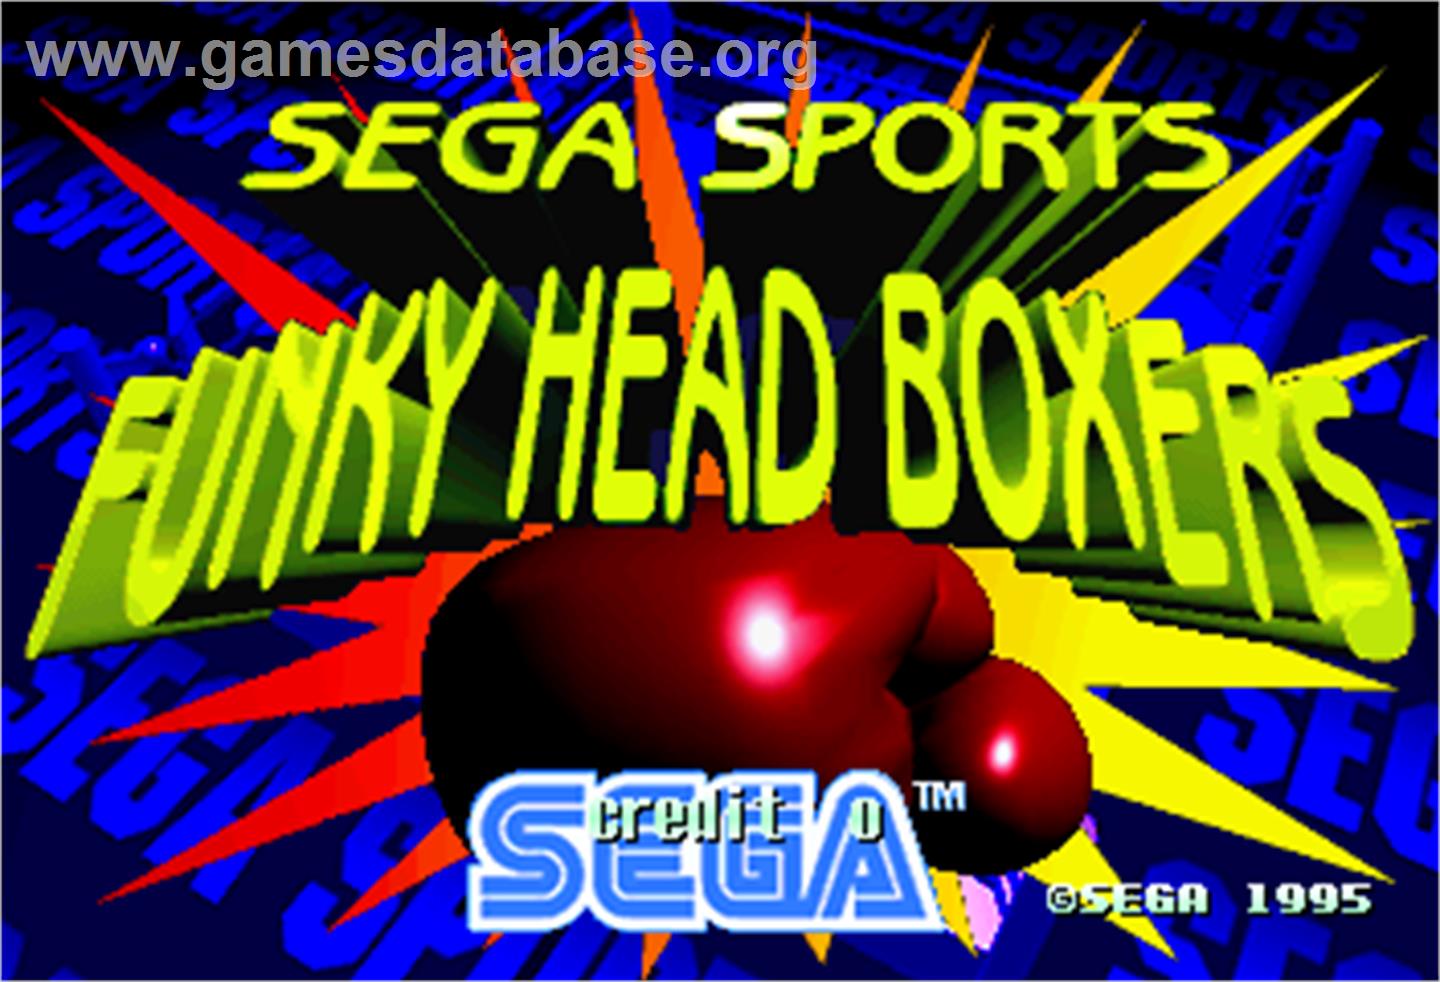 Funky Head Boxers - Arcade - Artwork - Title Screen